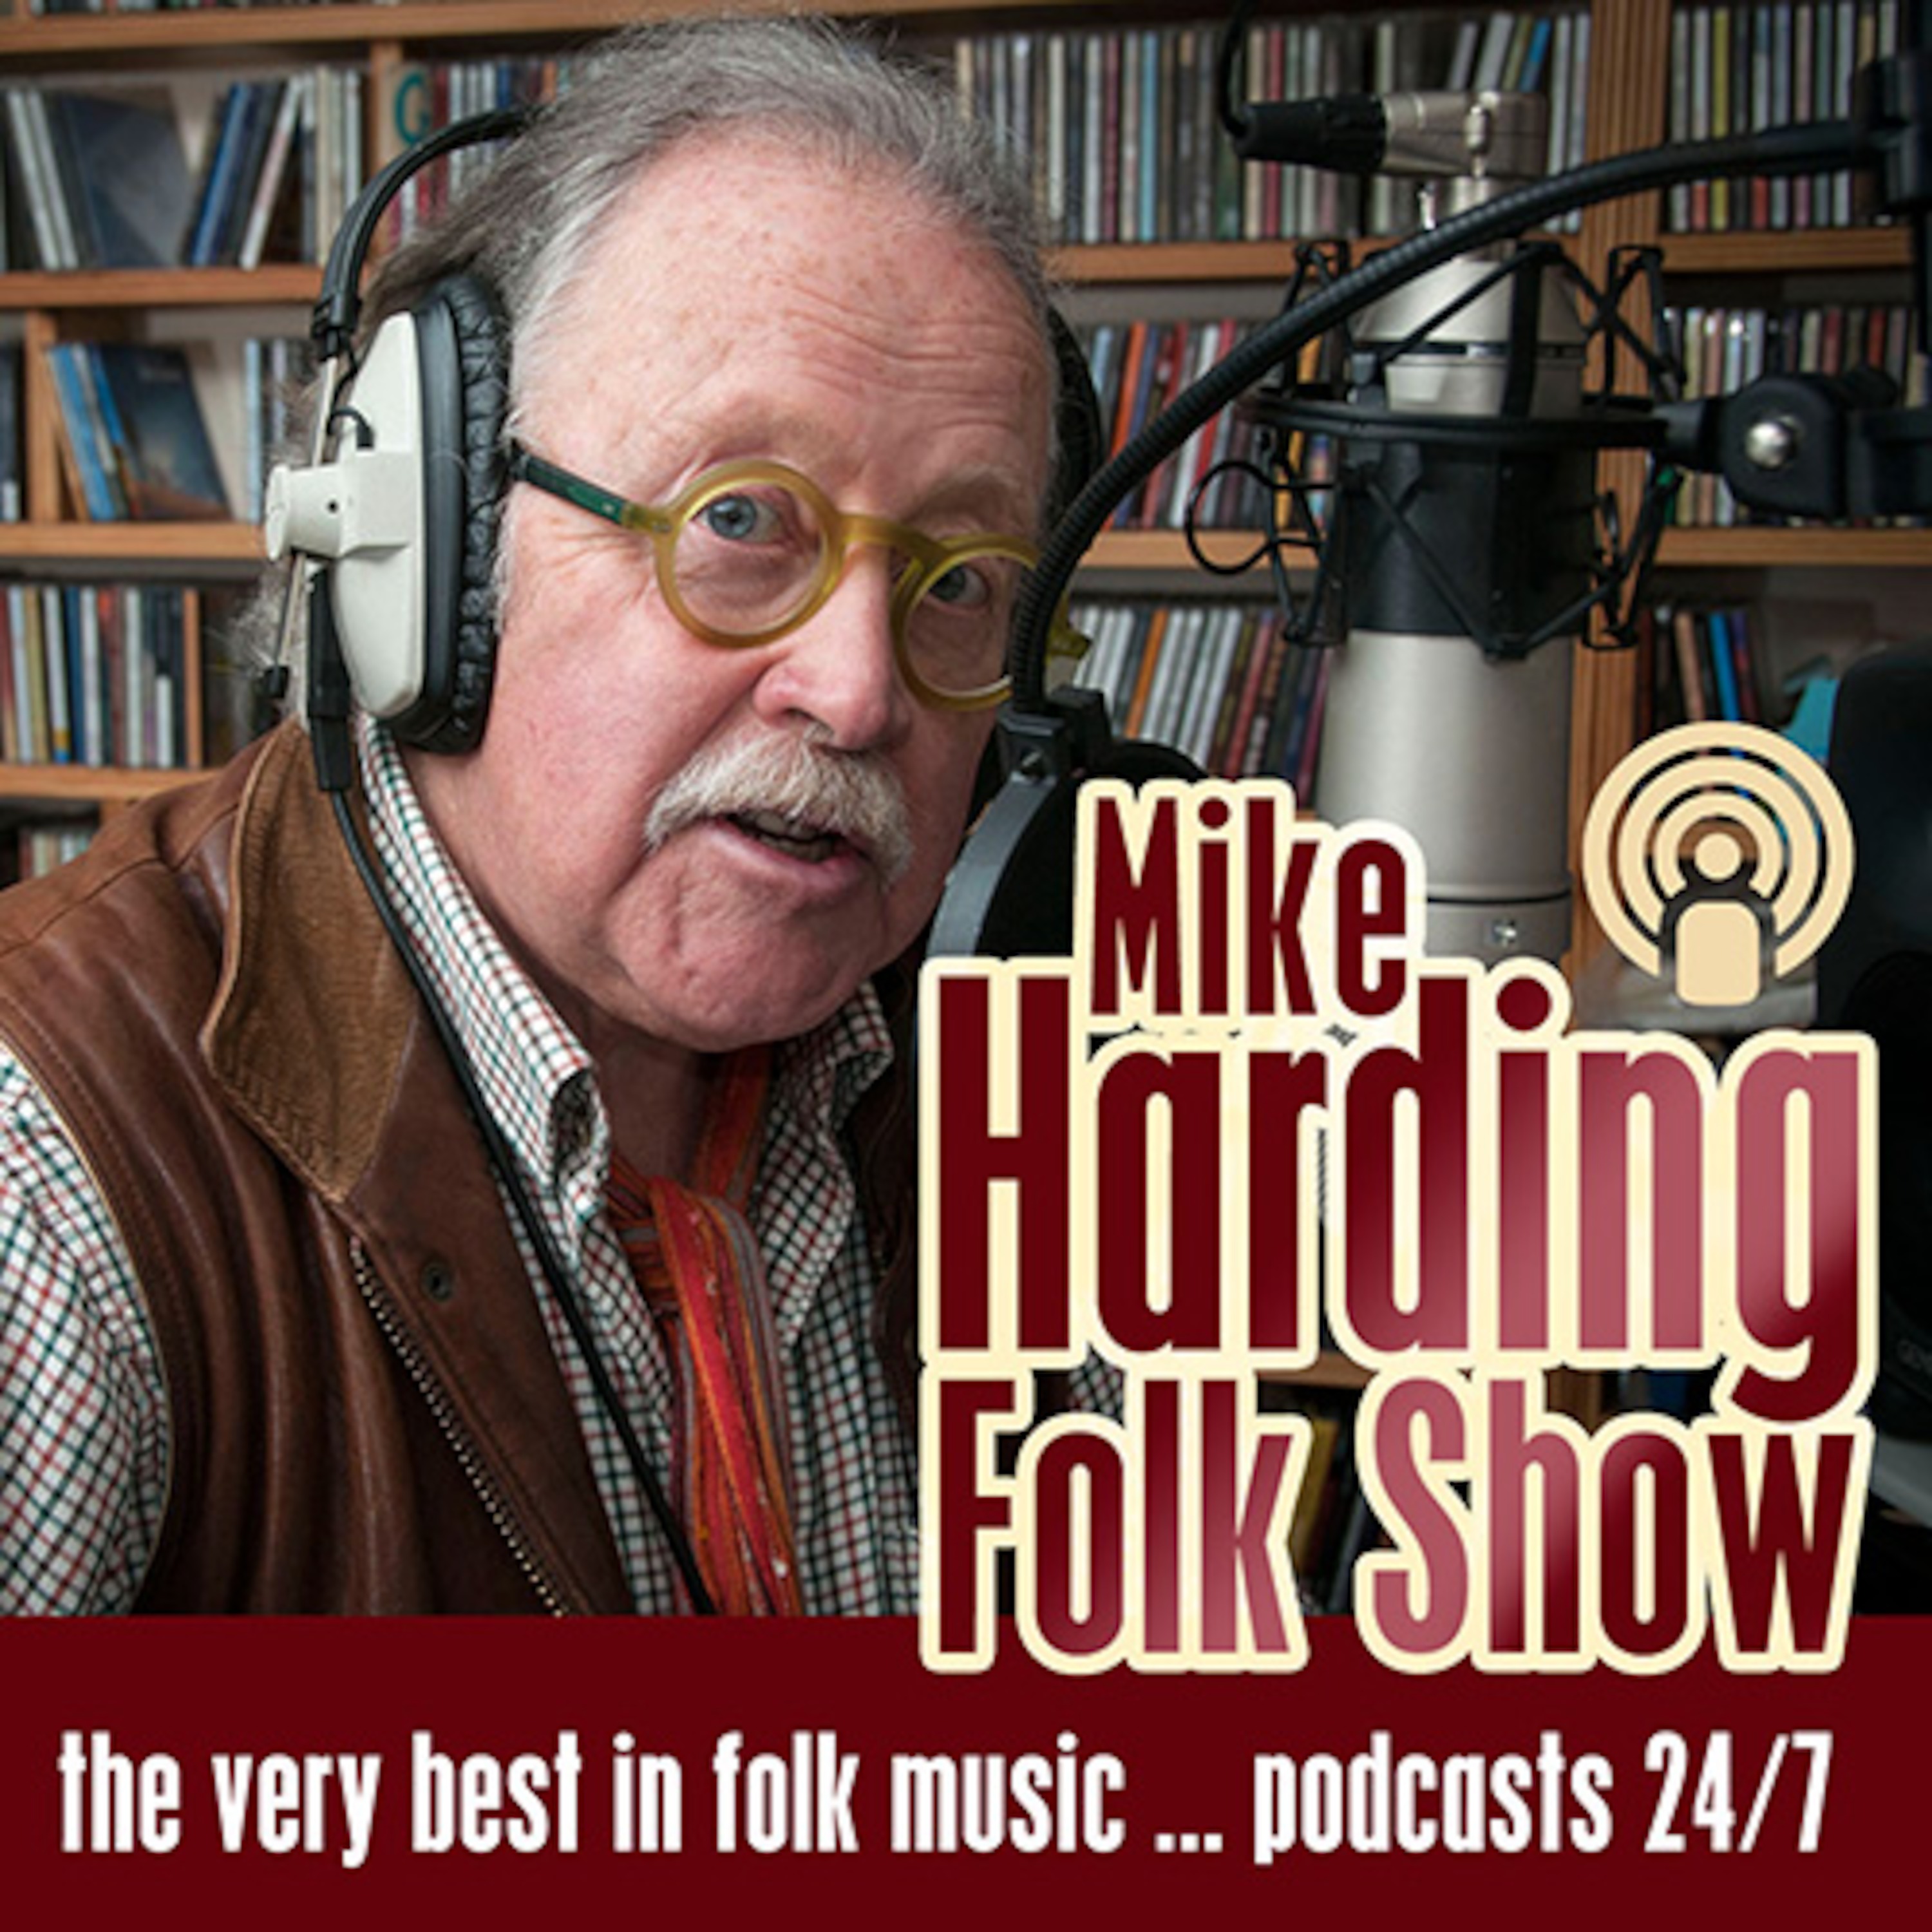 Mike Harding Folk Show 50